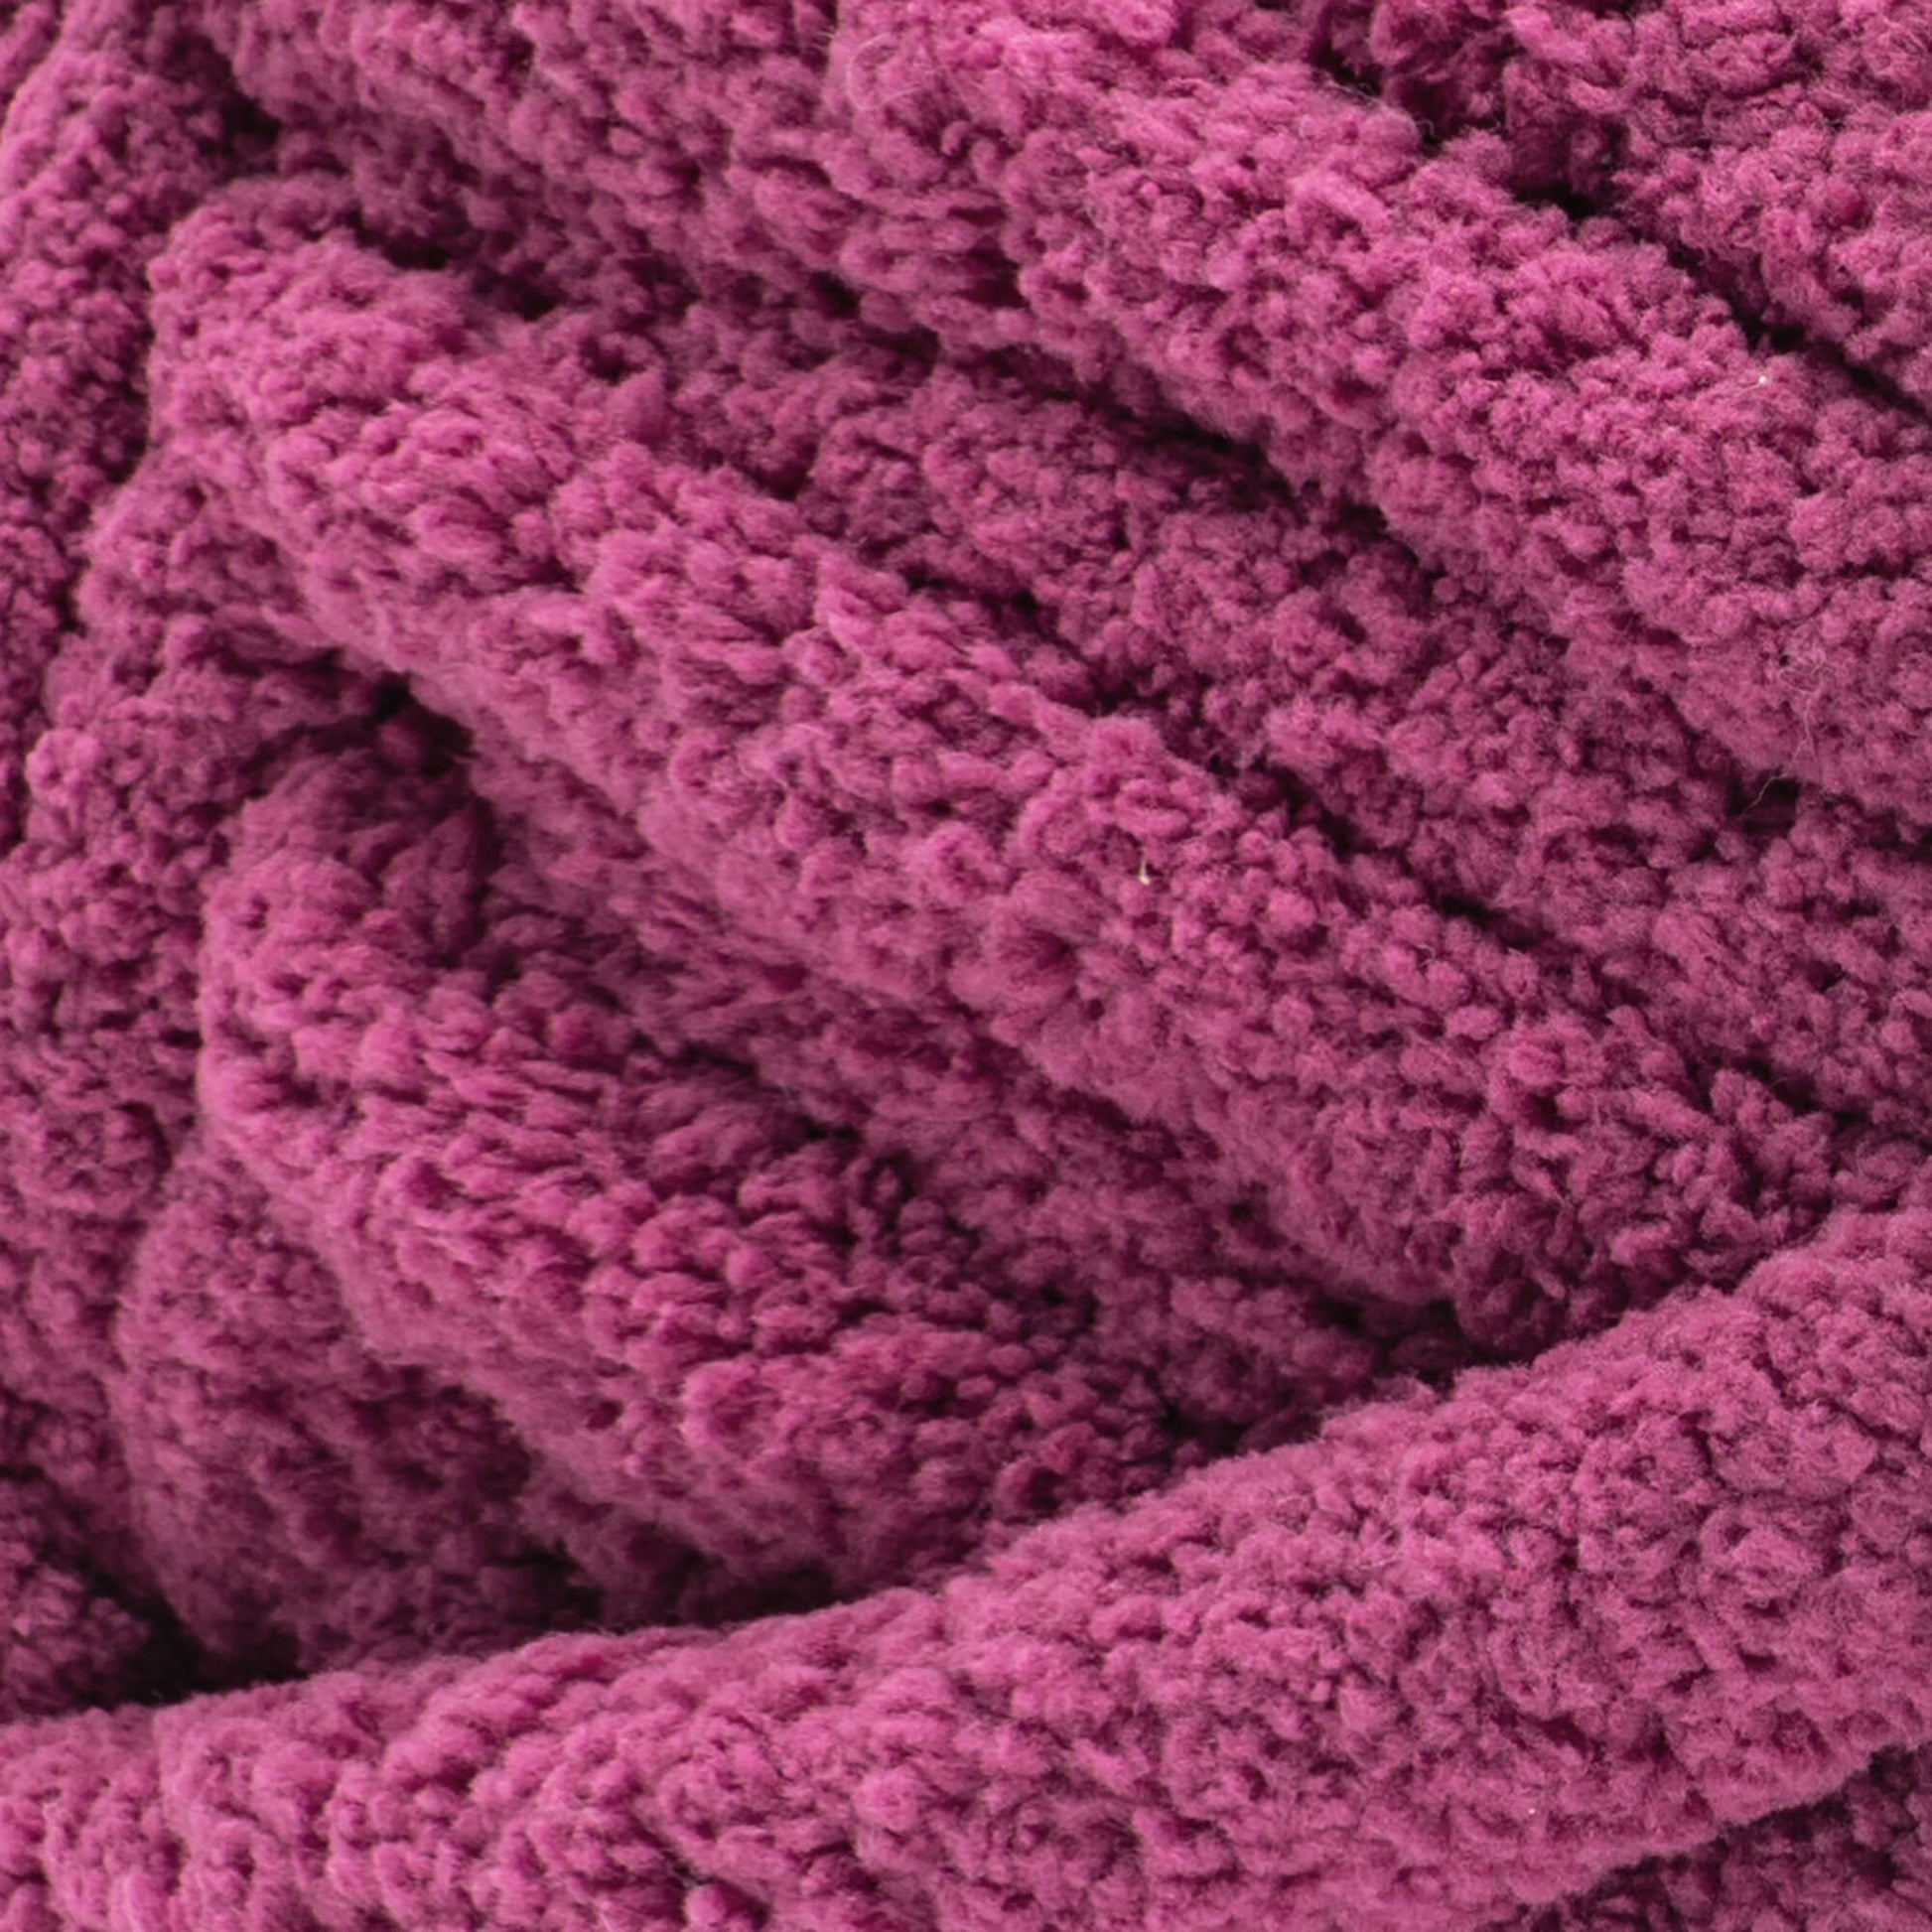 Bernat Blanket Extra Thick Yarn (600g/21.2oz) - Discontinued Shades Orchid